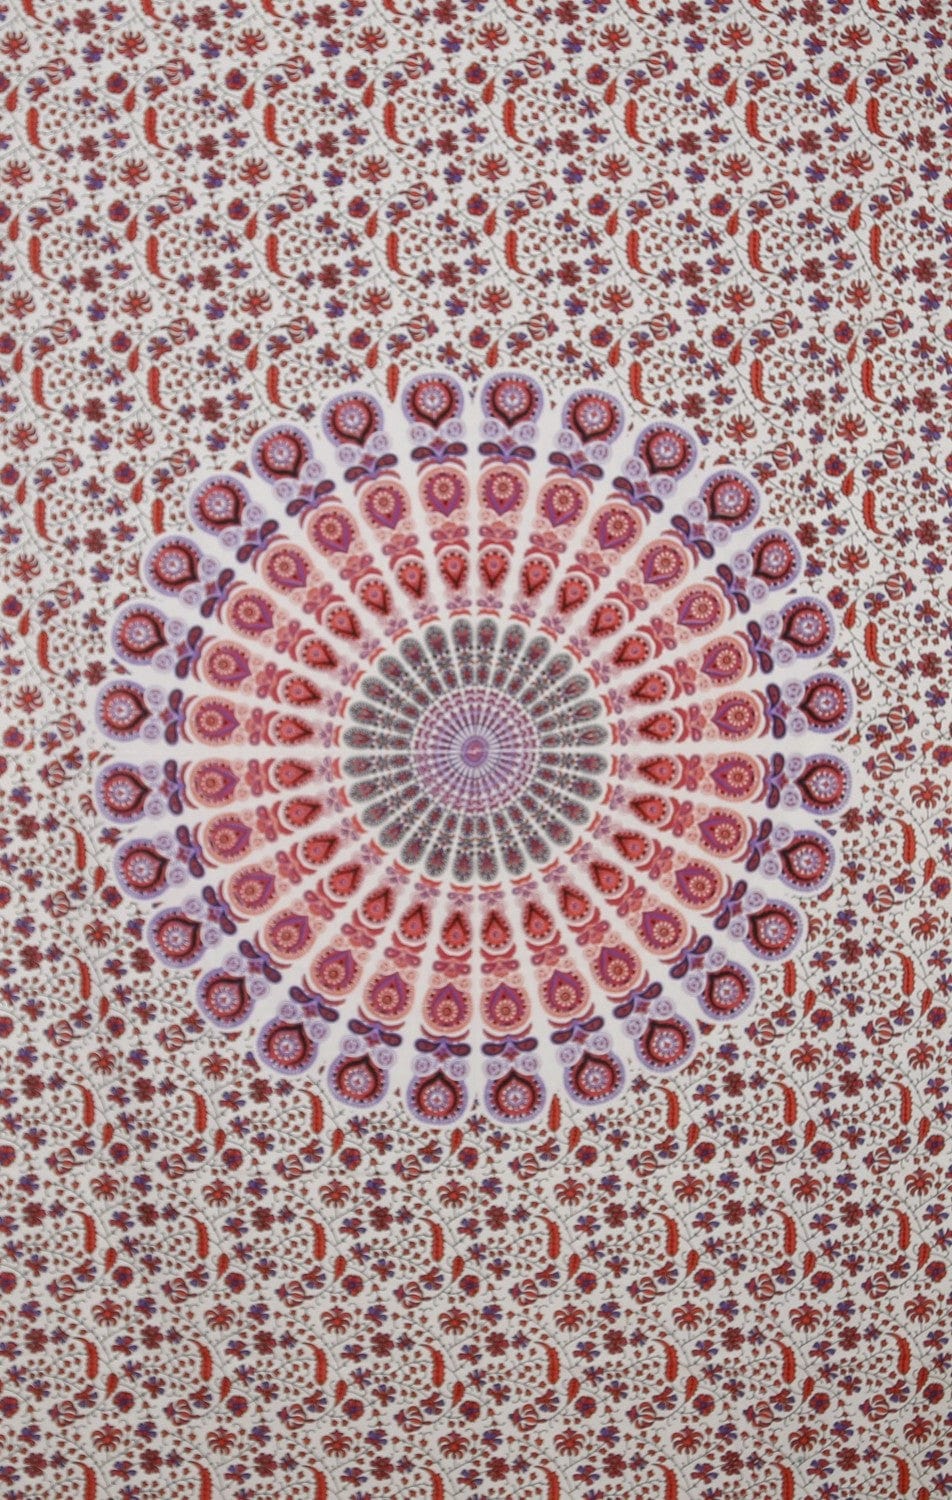 Tapestries Flowering Peacock Mandala - Pink, Purple and Red - Tapestry 102319